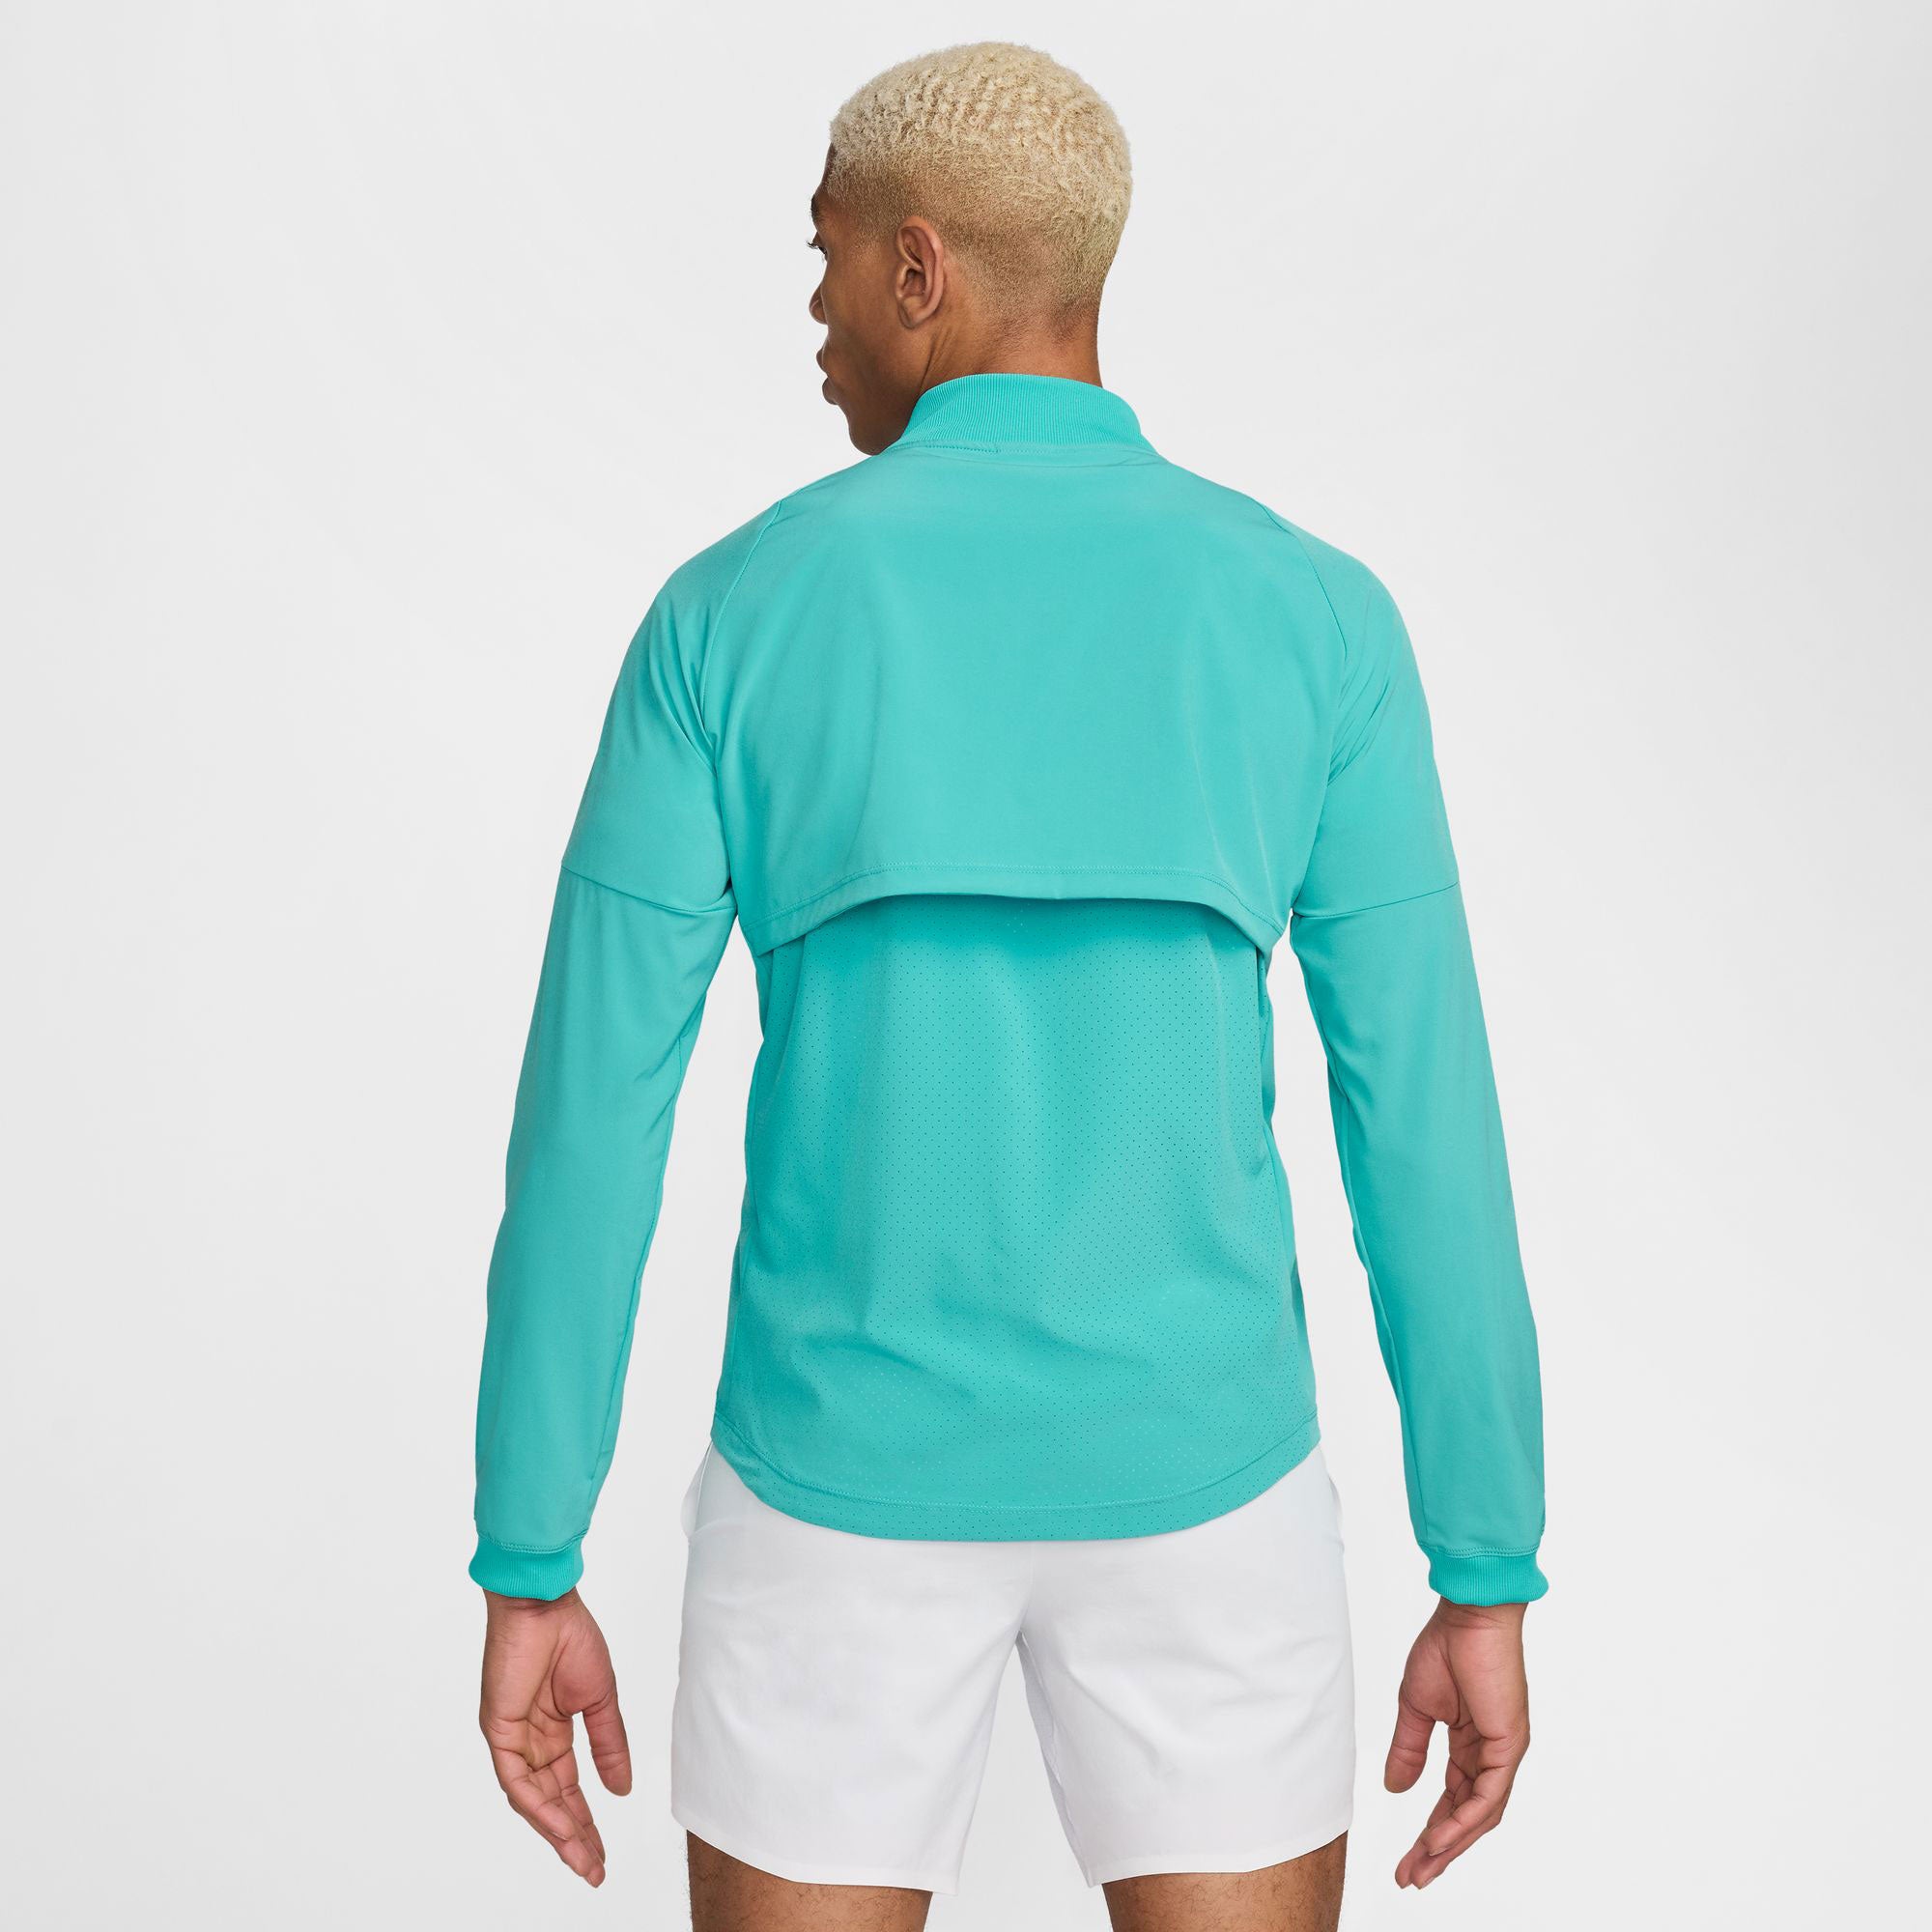 Nike Rafa Men's Dri-FIT Tennis Jacket - Green (2)